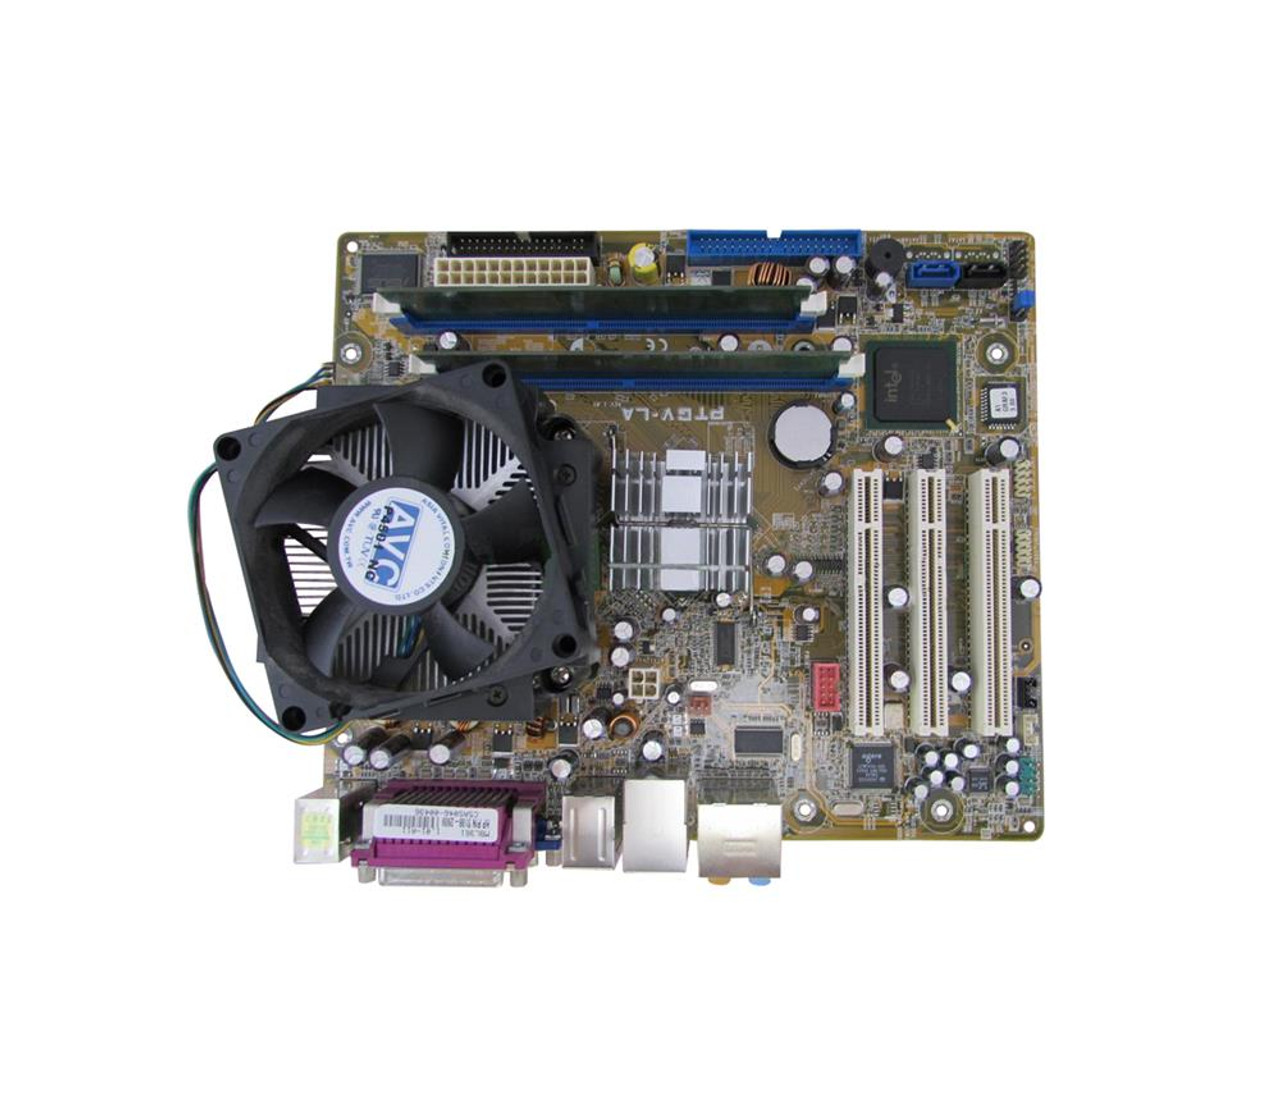 5188-2609 HP System Board (MotherBoard) Grafito-GL8E Intel I915GV Intel ICH6 Chipset Socket-775 (Refurbished)